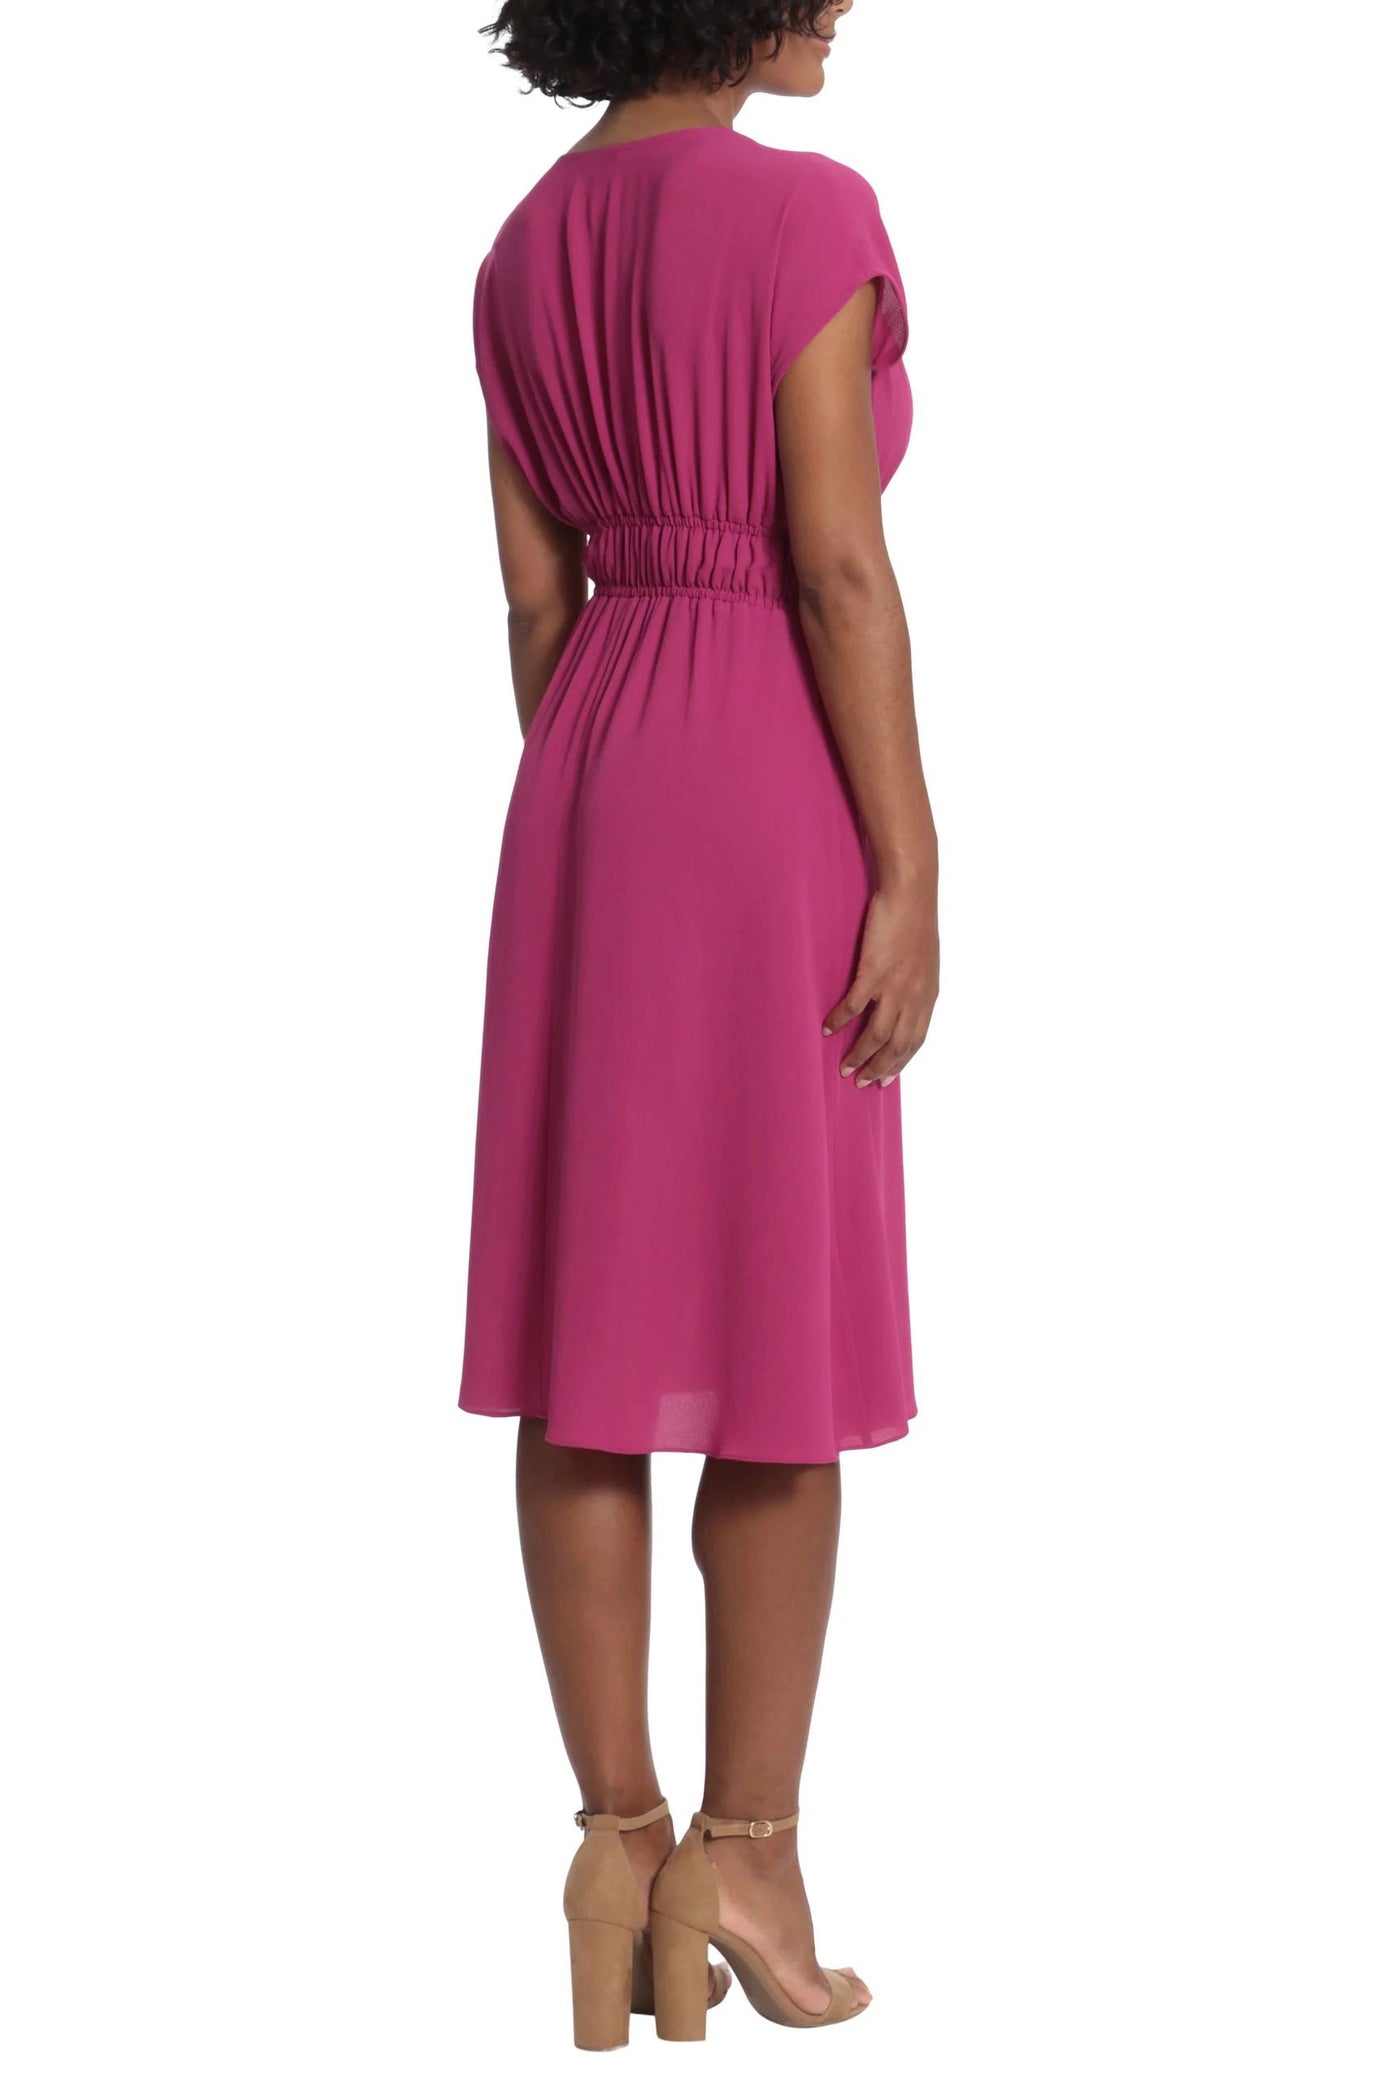 Catalina Crepe Mini Dress - Moody Fitzs Boutique